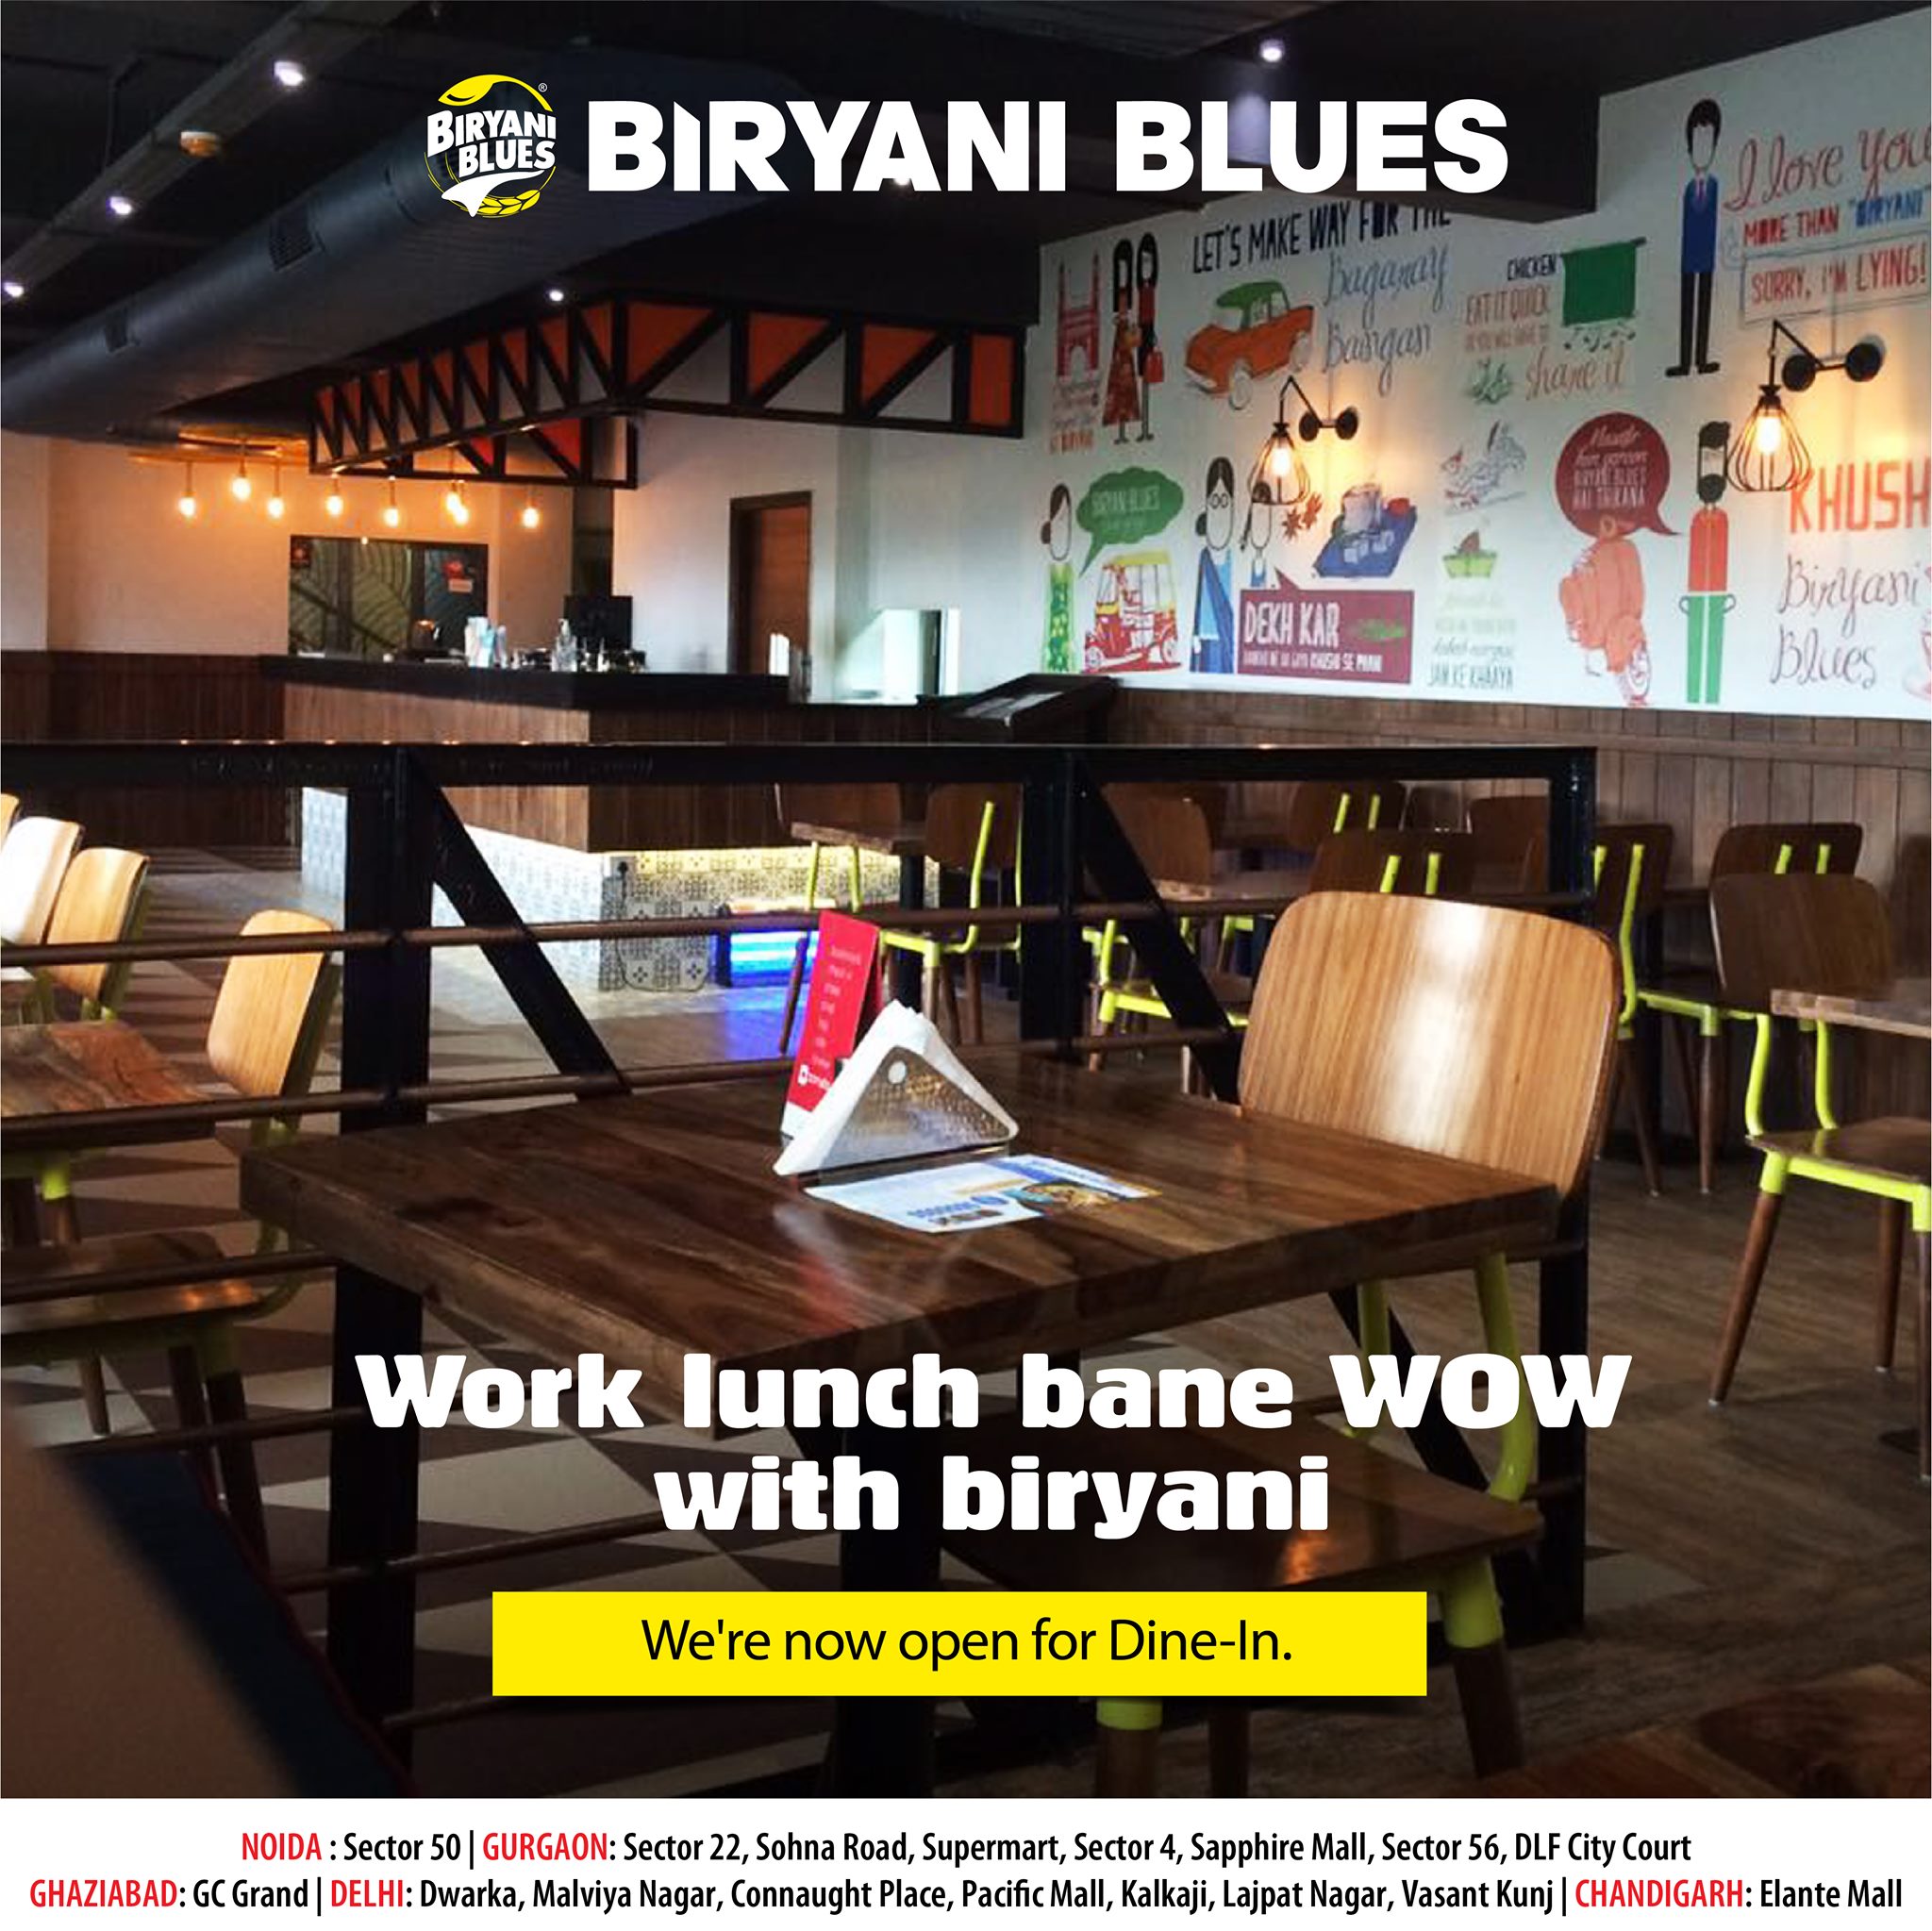 Biryani Blues Dwarka Pics